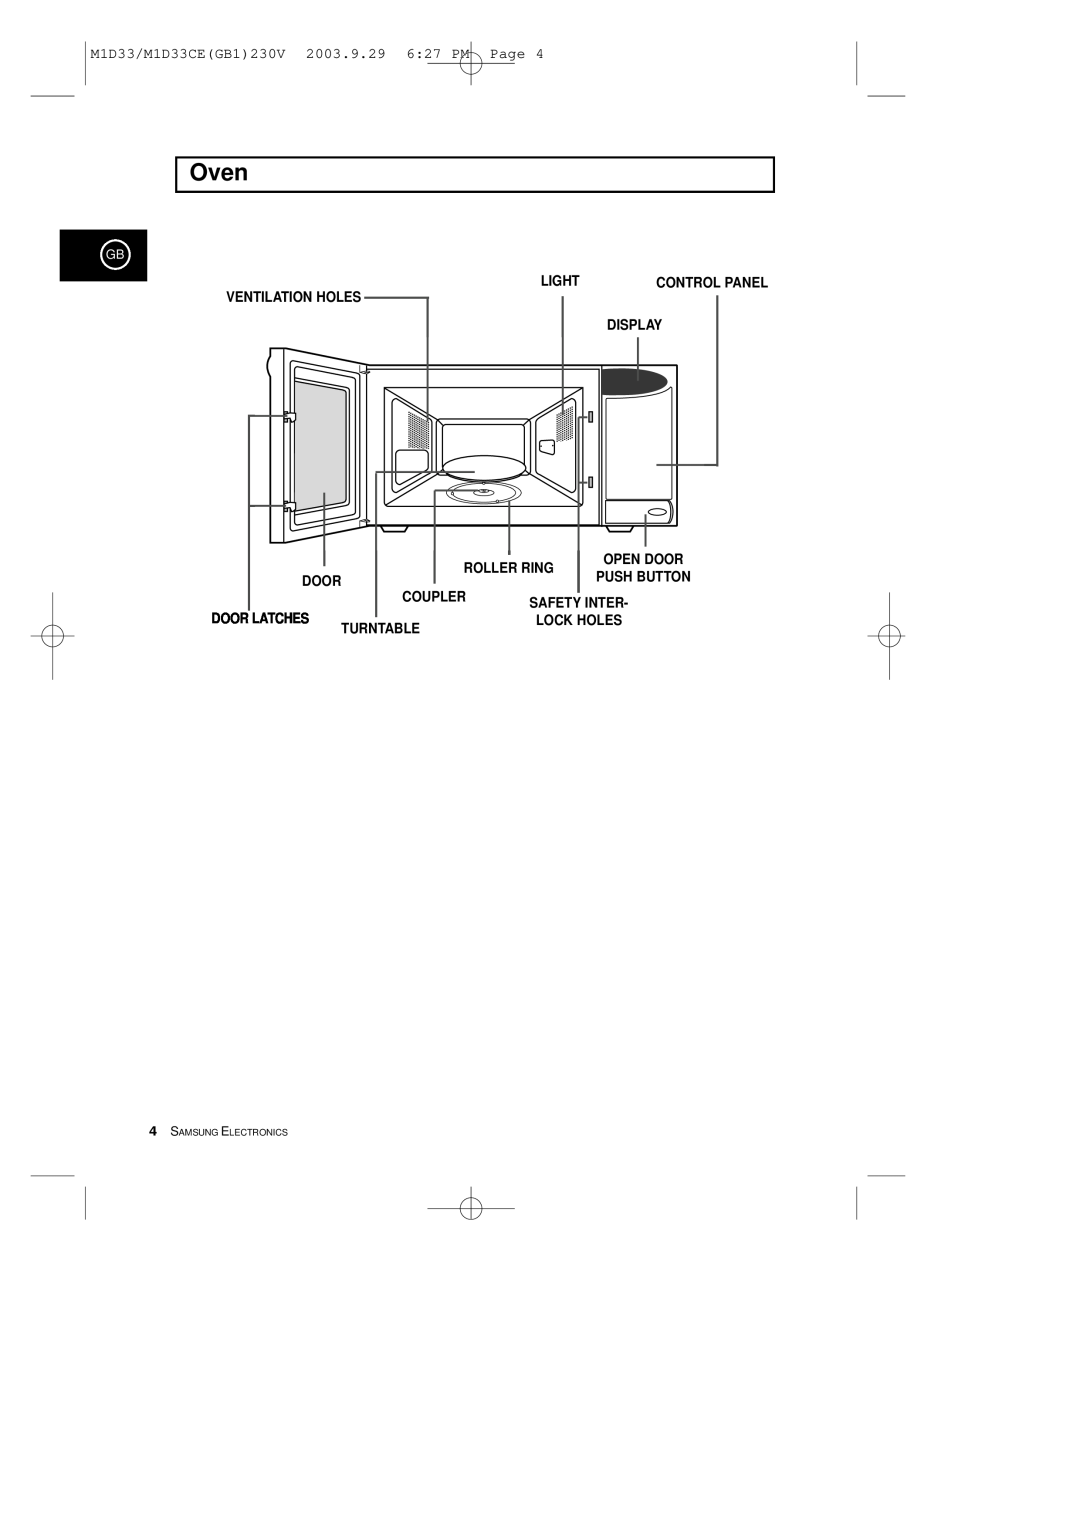 Samsung Oven, M1D33/M1D33CEGB1230V 2003.9.29 627 PM Page, Ventilation Holes, Light, Display, Open Door, Roller Ring 